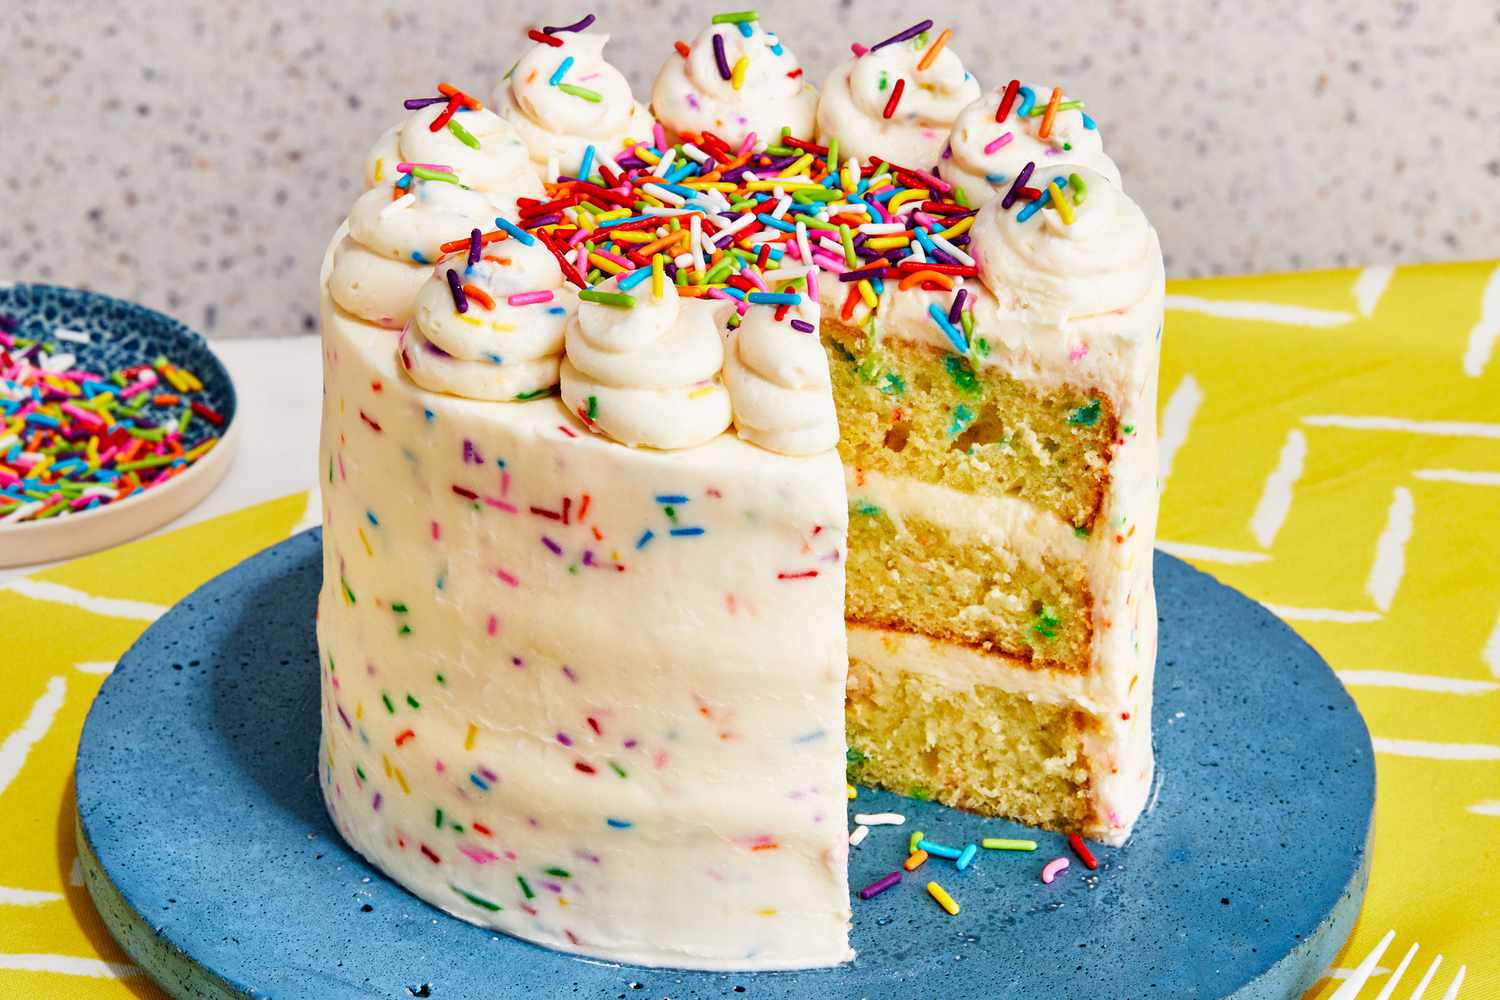 Cake Ideas for A 50th Birthday